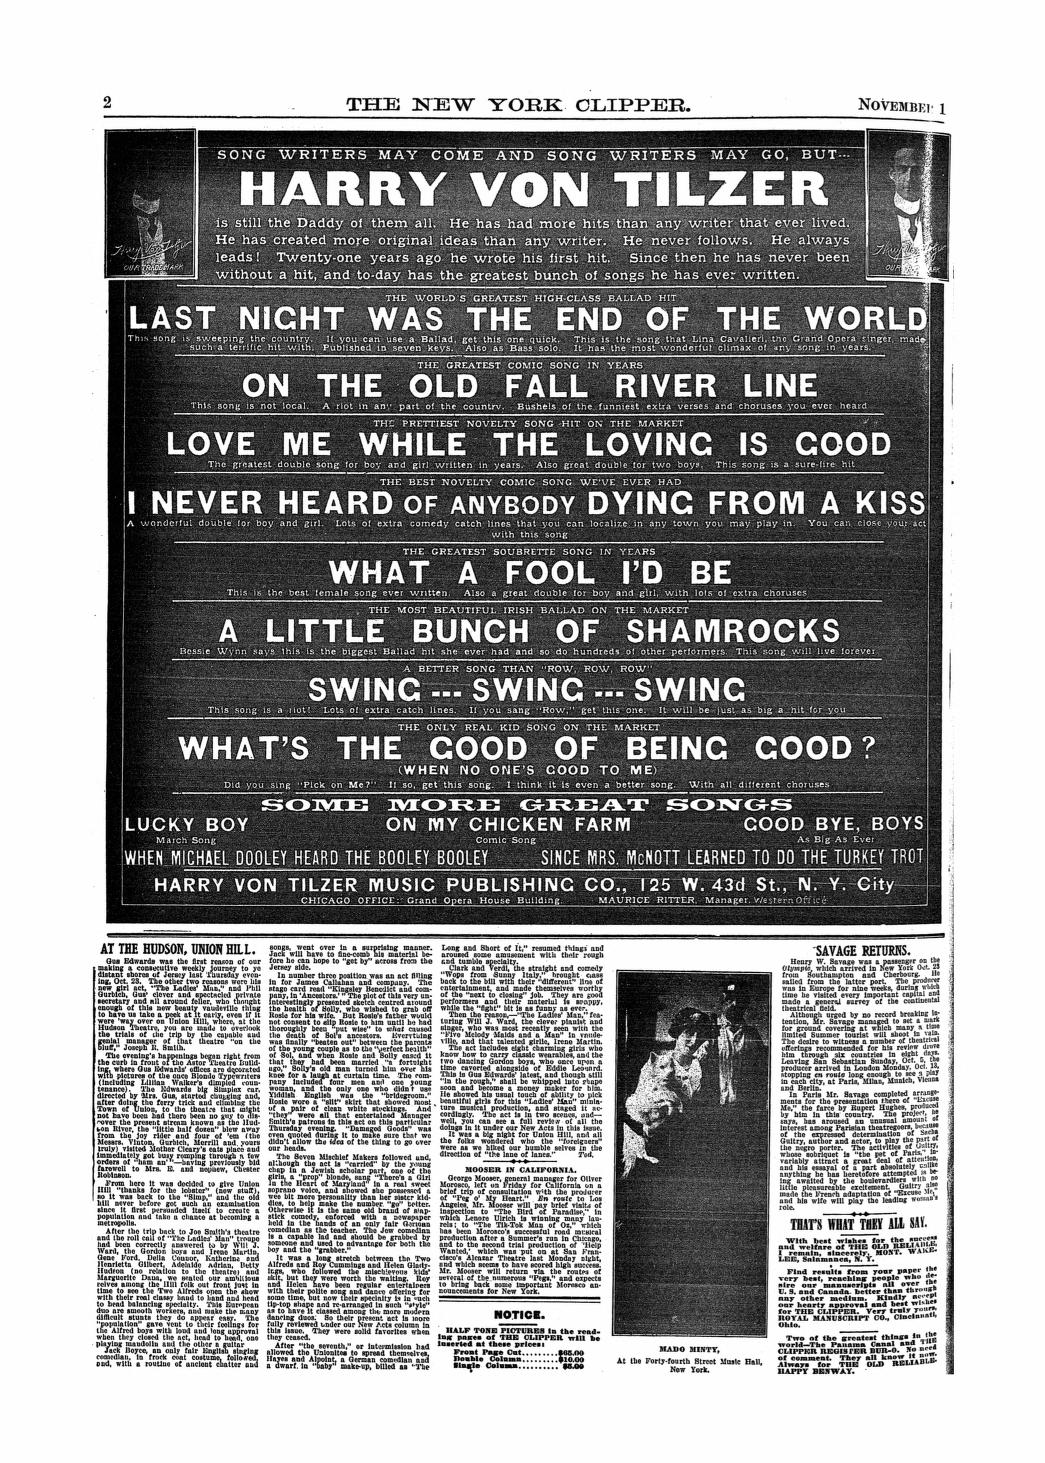 The New York Clipper (November 1913)